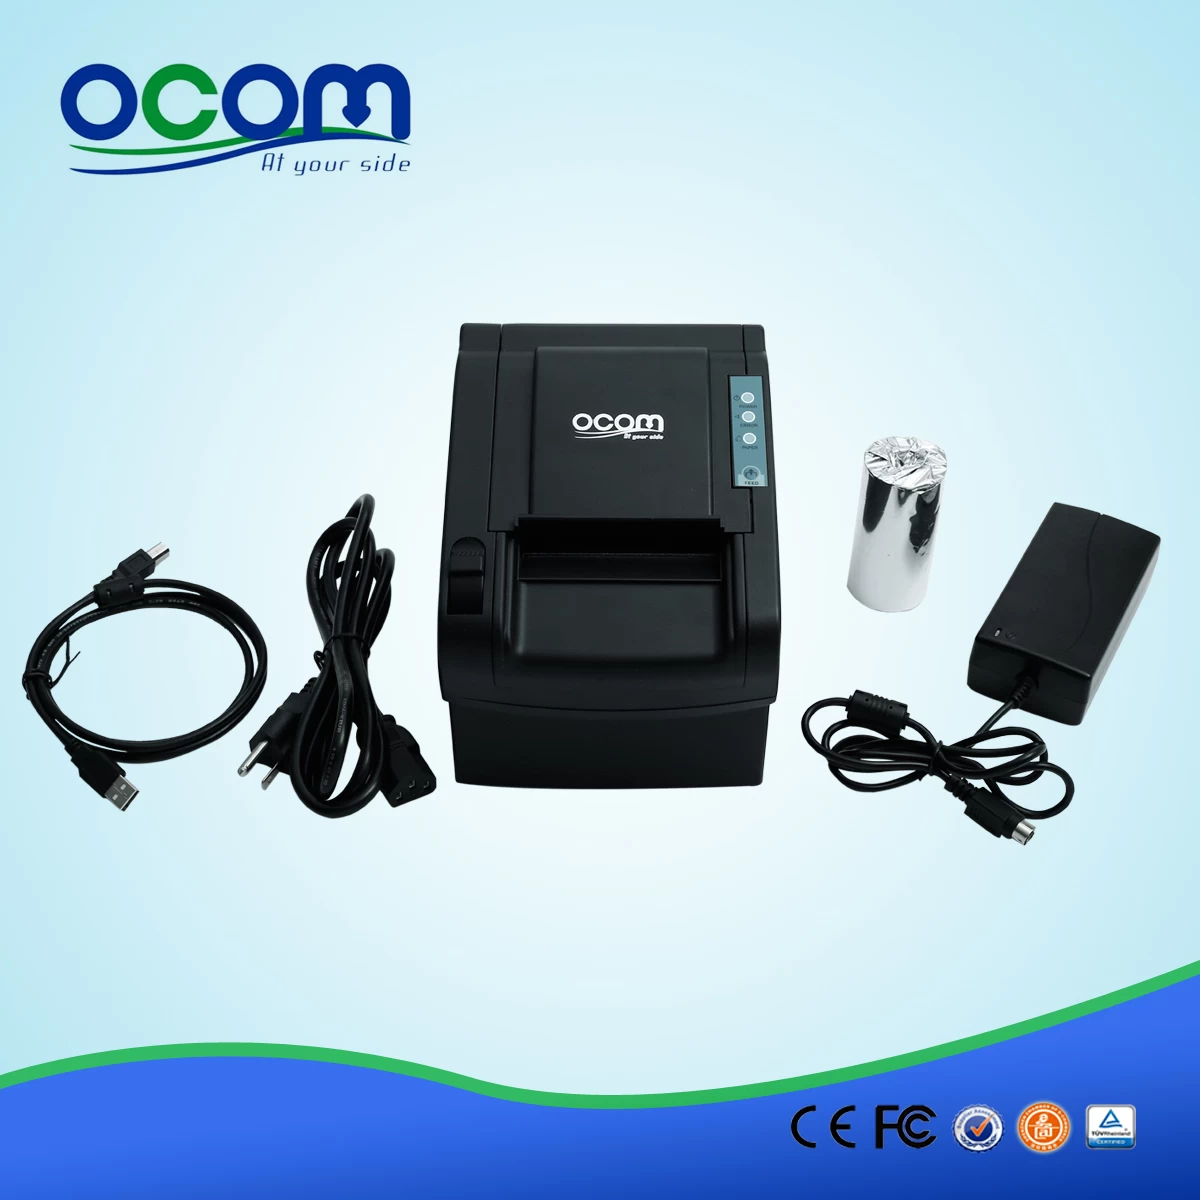 OCPP-802: supply cheap thermal printer module, thermal printer price in india